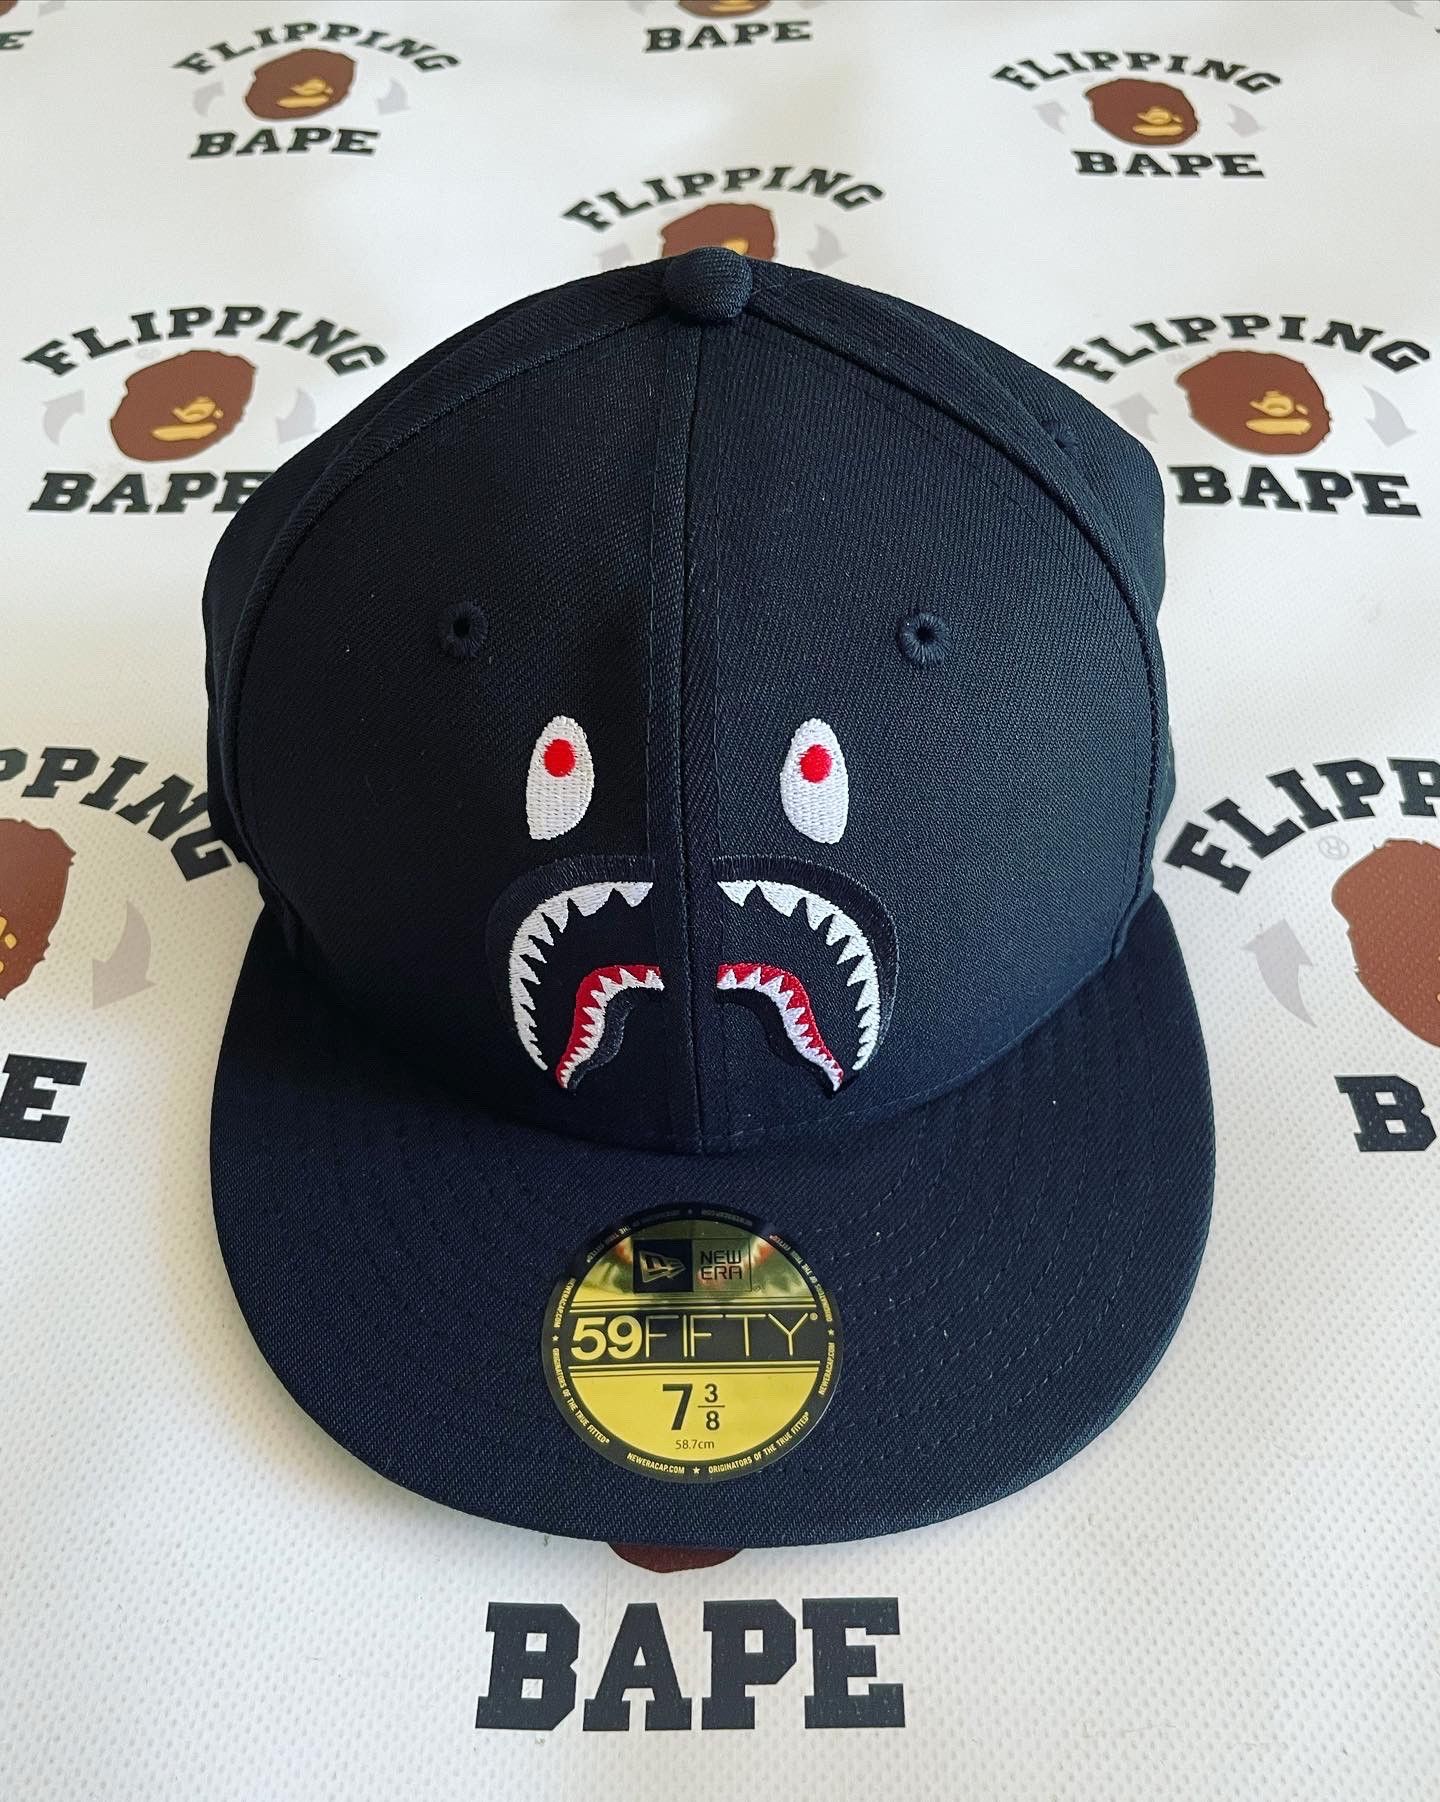 Bape BAPE SHARK NEW ERA 59FIFTY CAP | Grailed